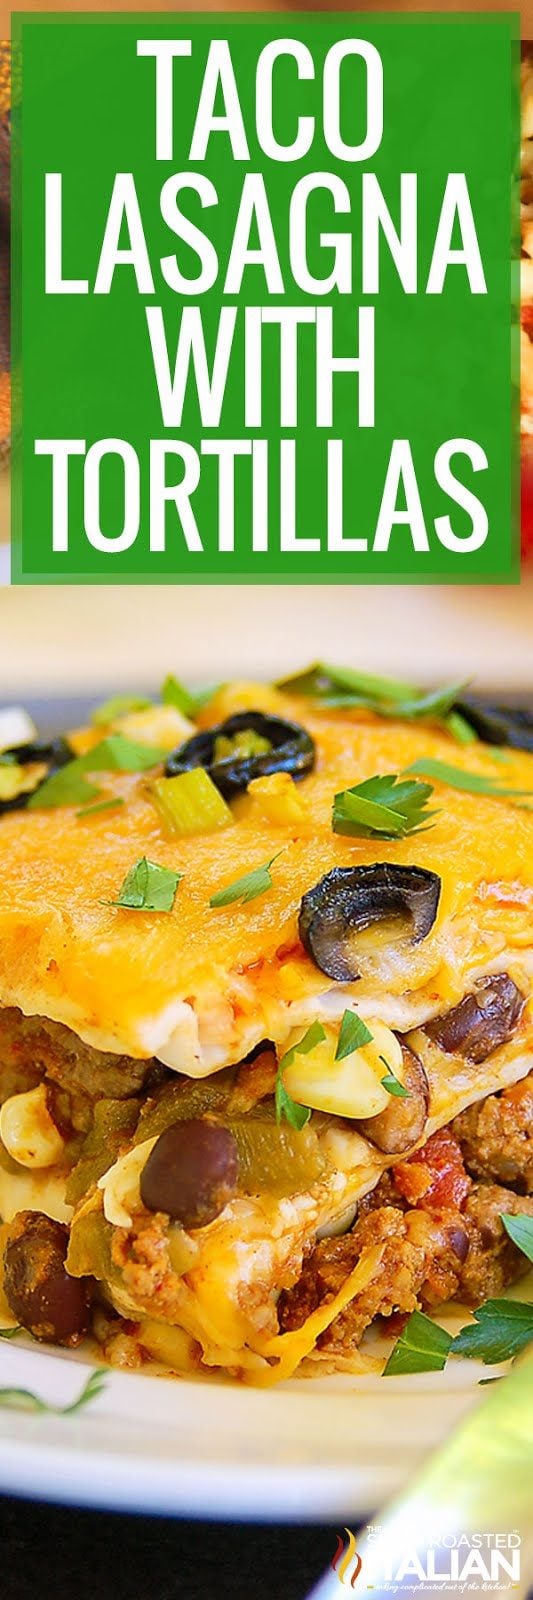 taco-lasagna-with-tortillas-pin-2915584